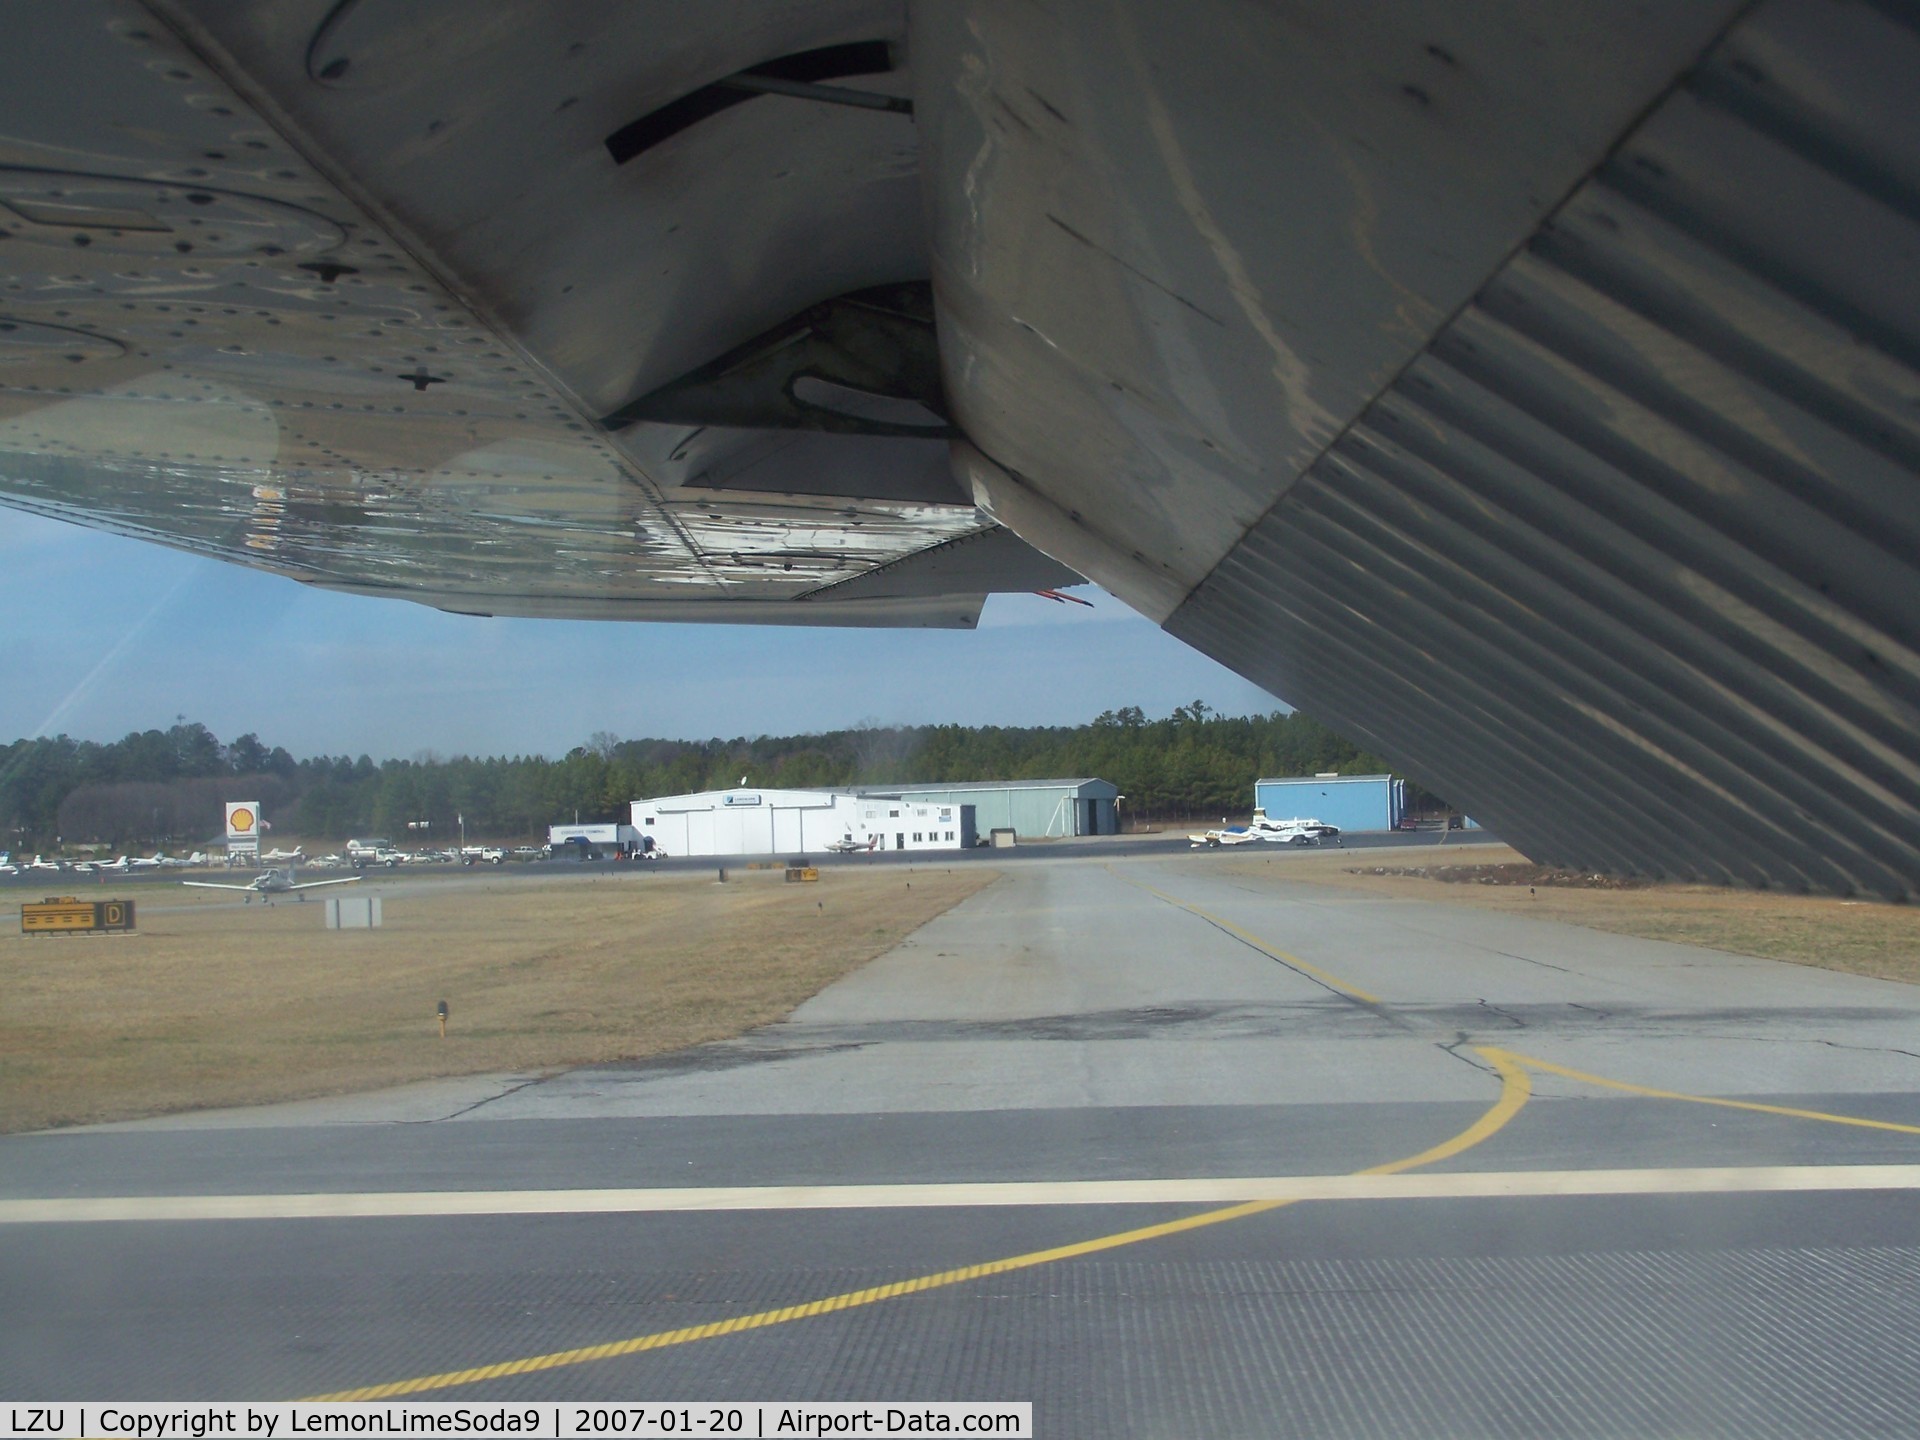 Gwinnett County - Briscoe Field Airport (LZU) - This was taken after landing at LZU